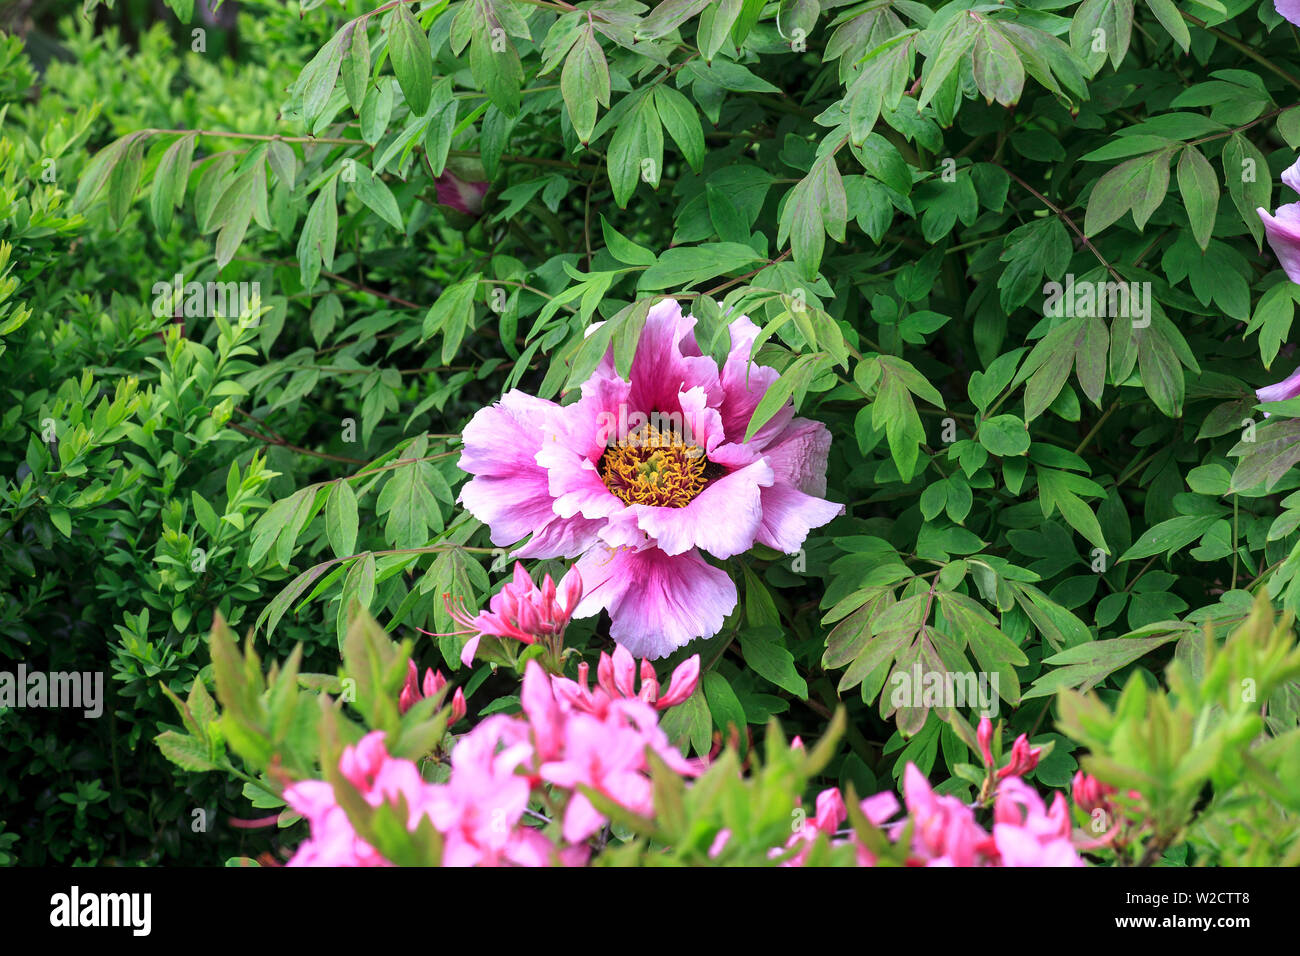 Green bush with big pink flower Paeonia rockii (rock's peony). Tree peony growing in spring garden Stock Photo